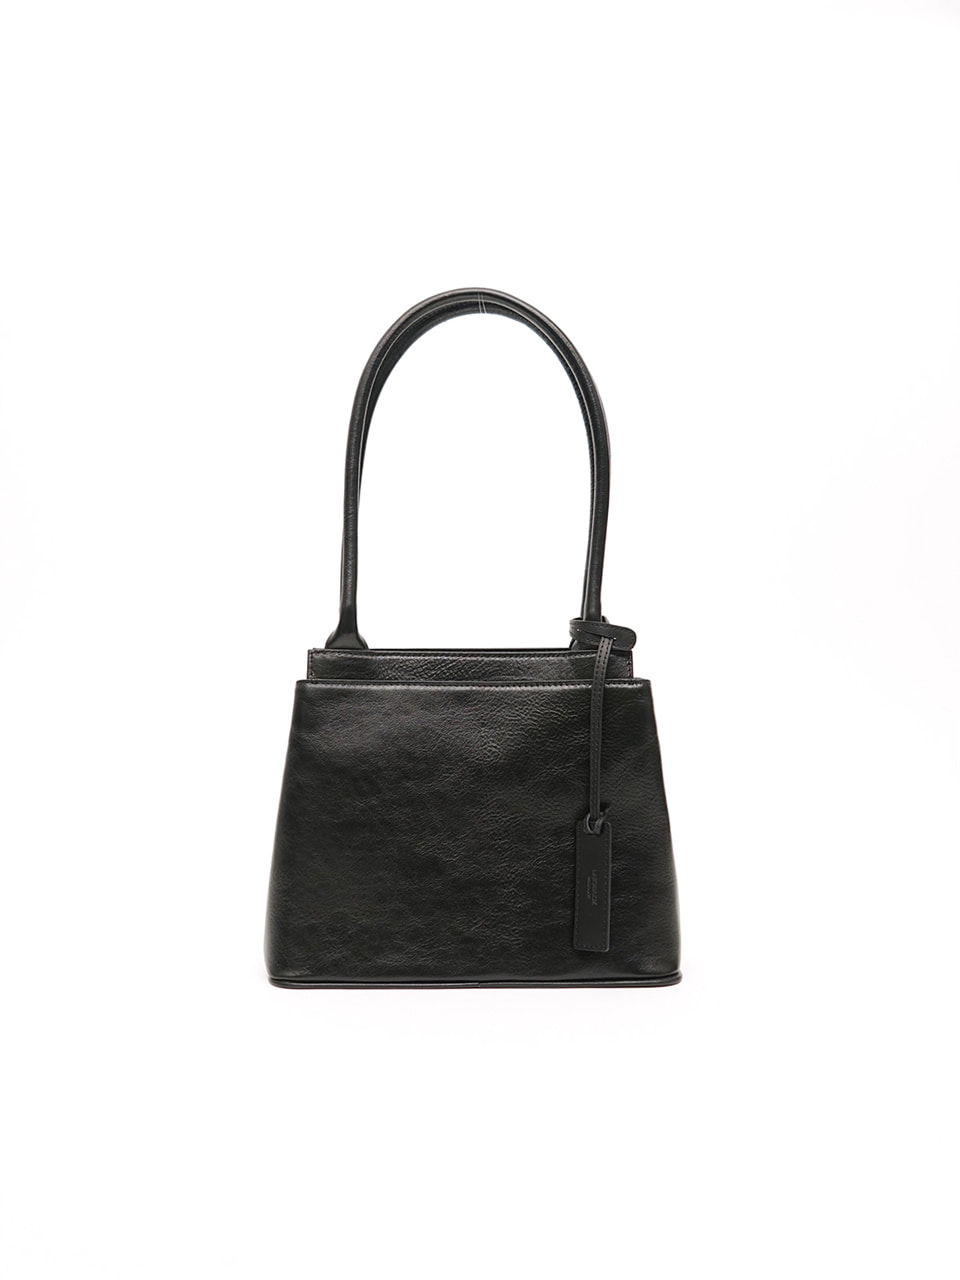 [New 10% off] Lano bag / black